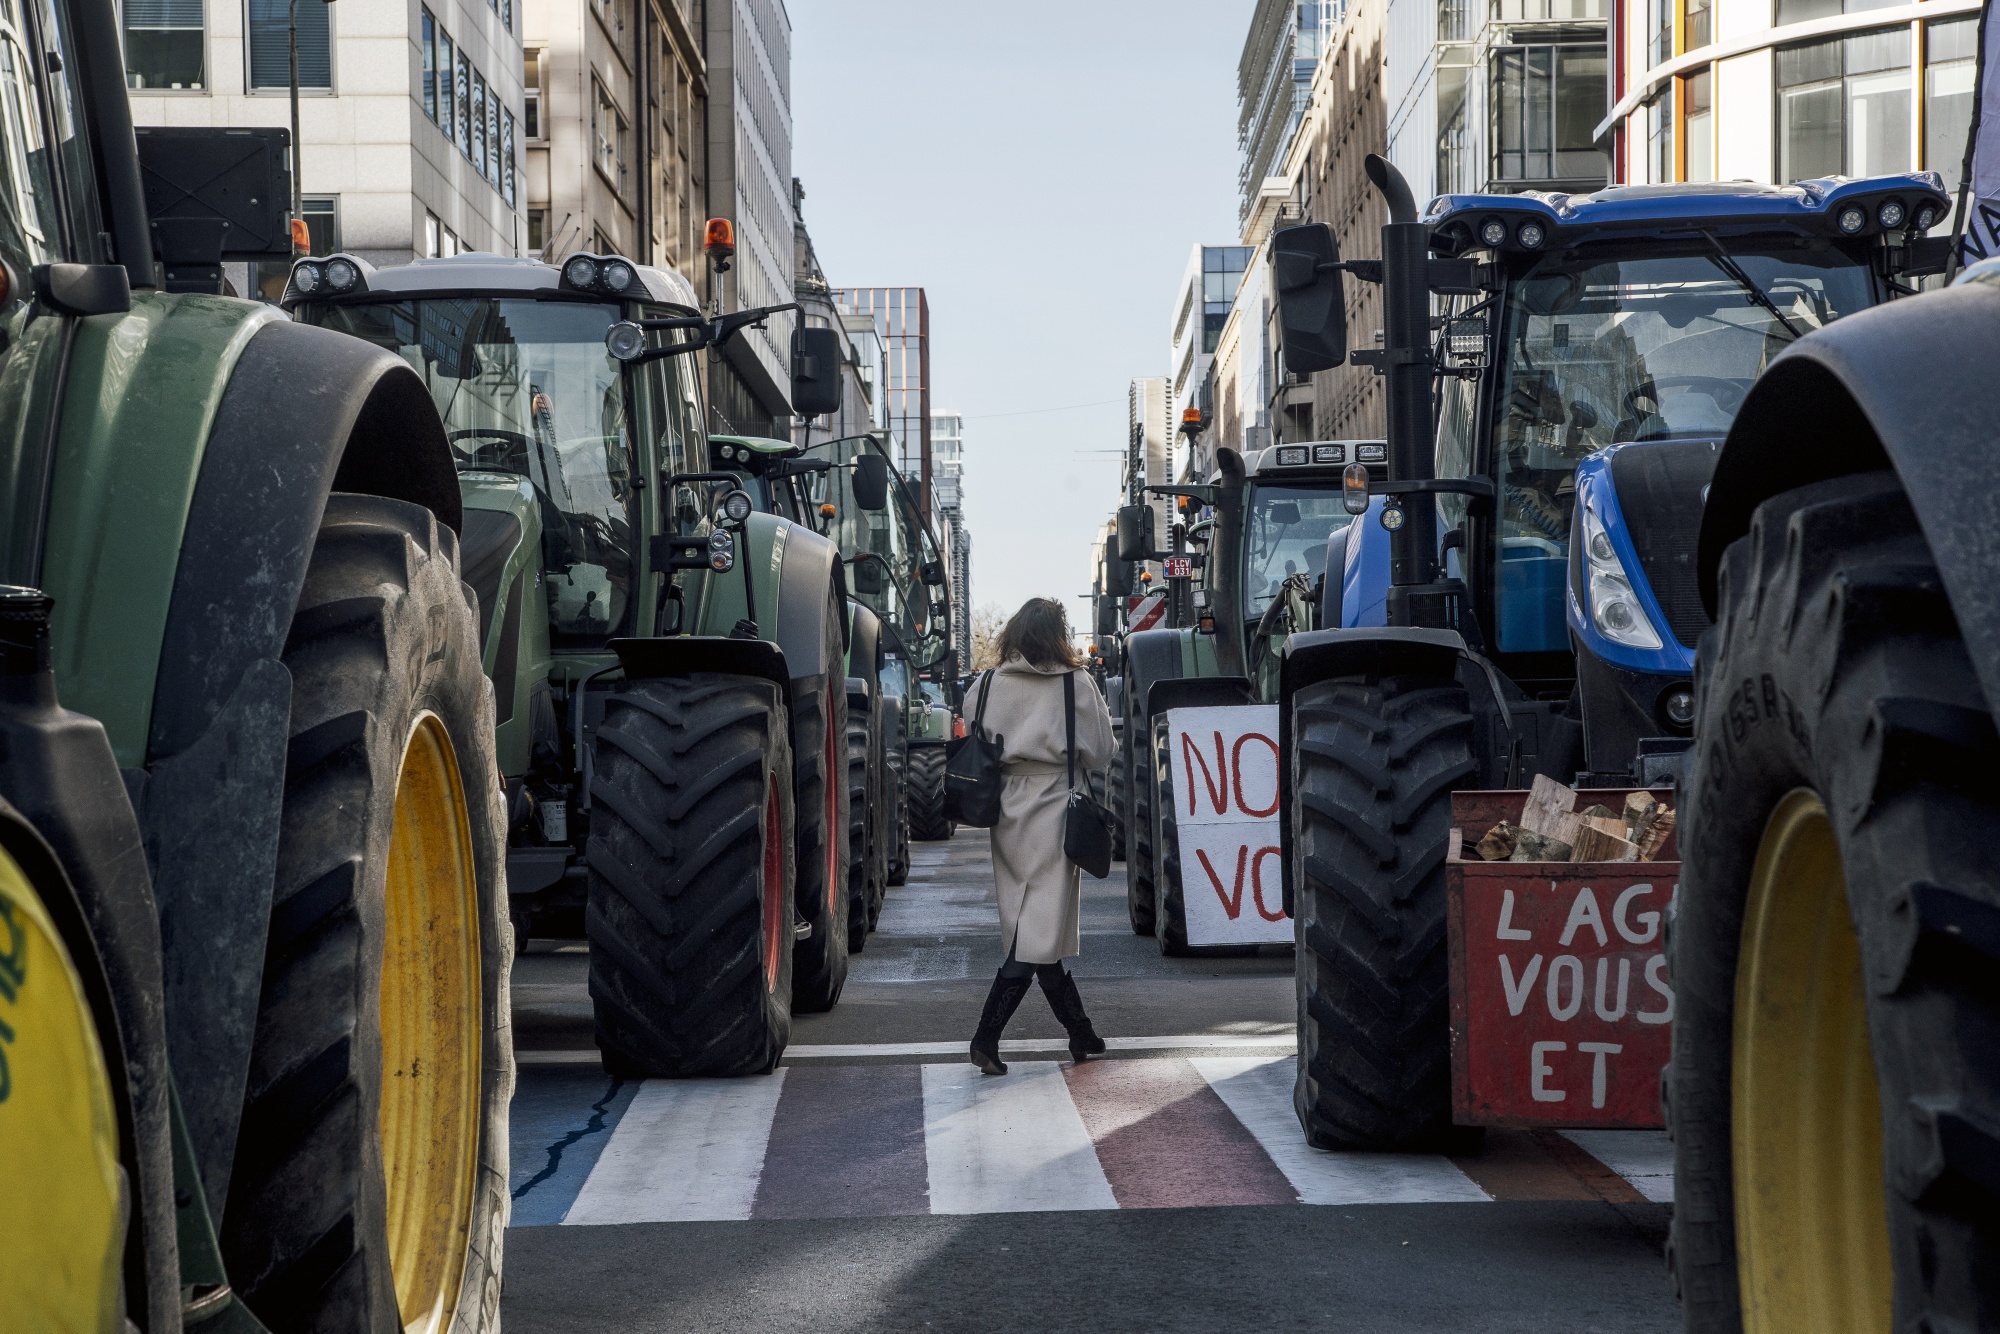 European farmer protests reveal struggles, make consumers rethink